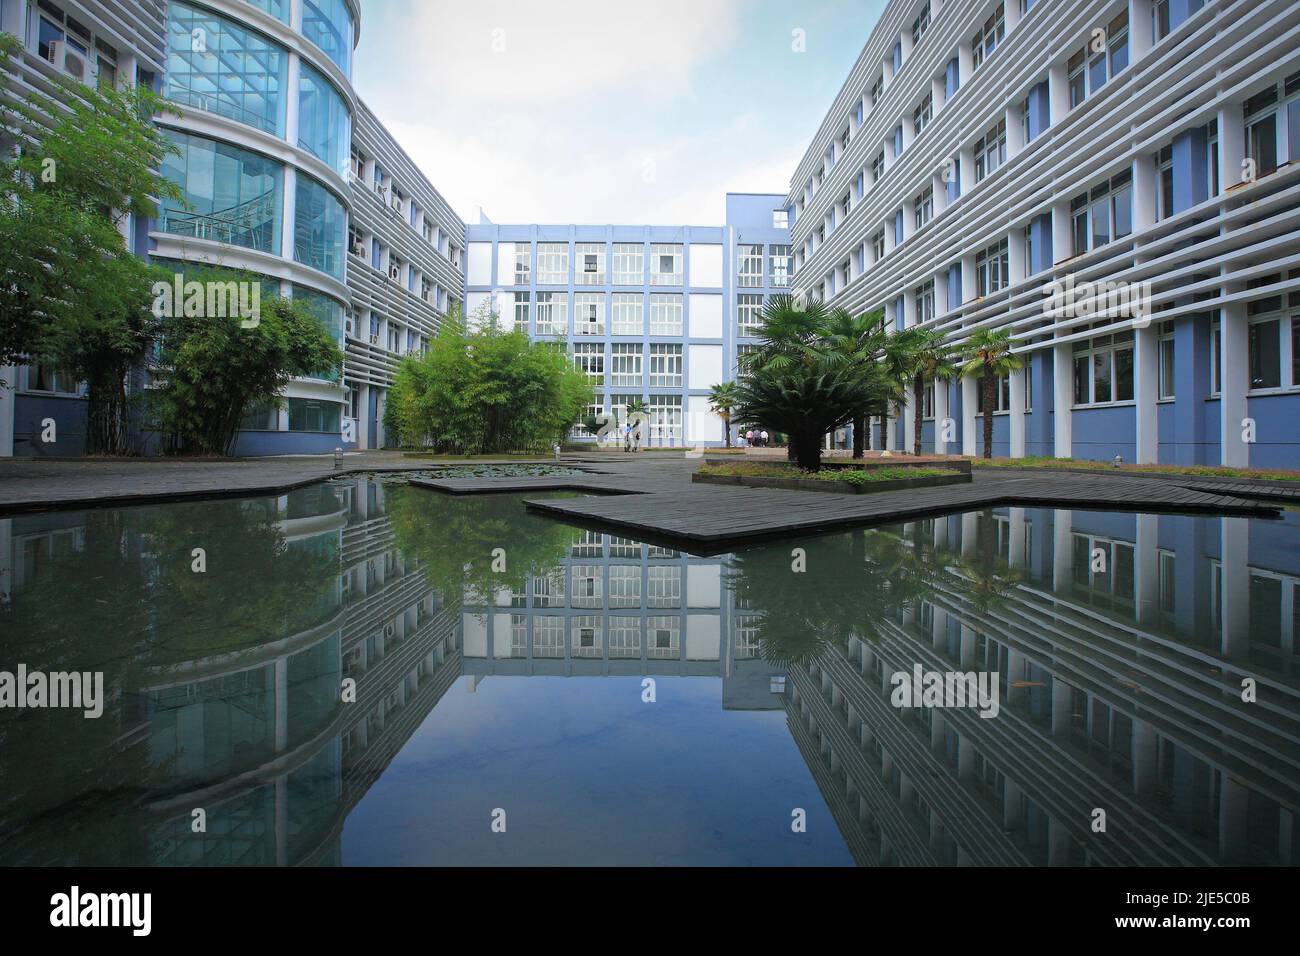 Zhejiang-universität, universität, hochschule, Schulcampus Stockfoto